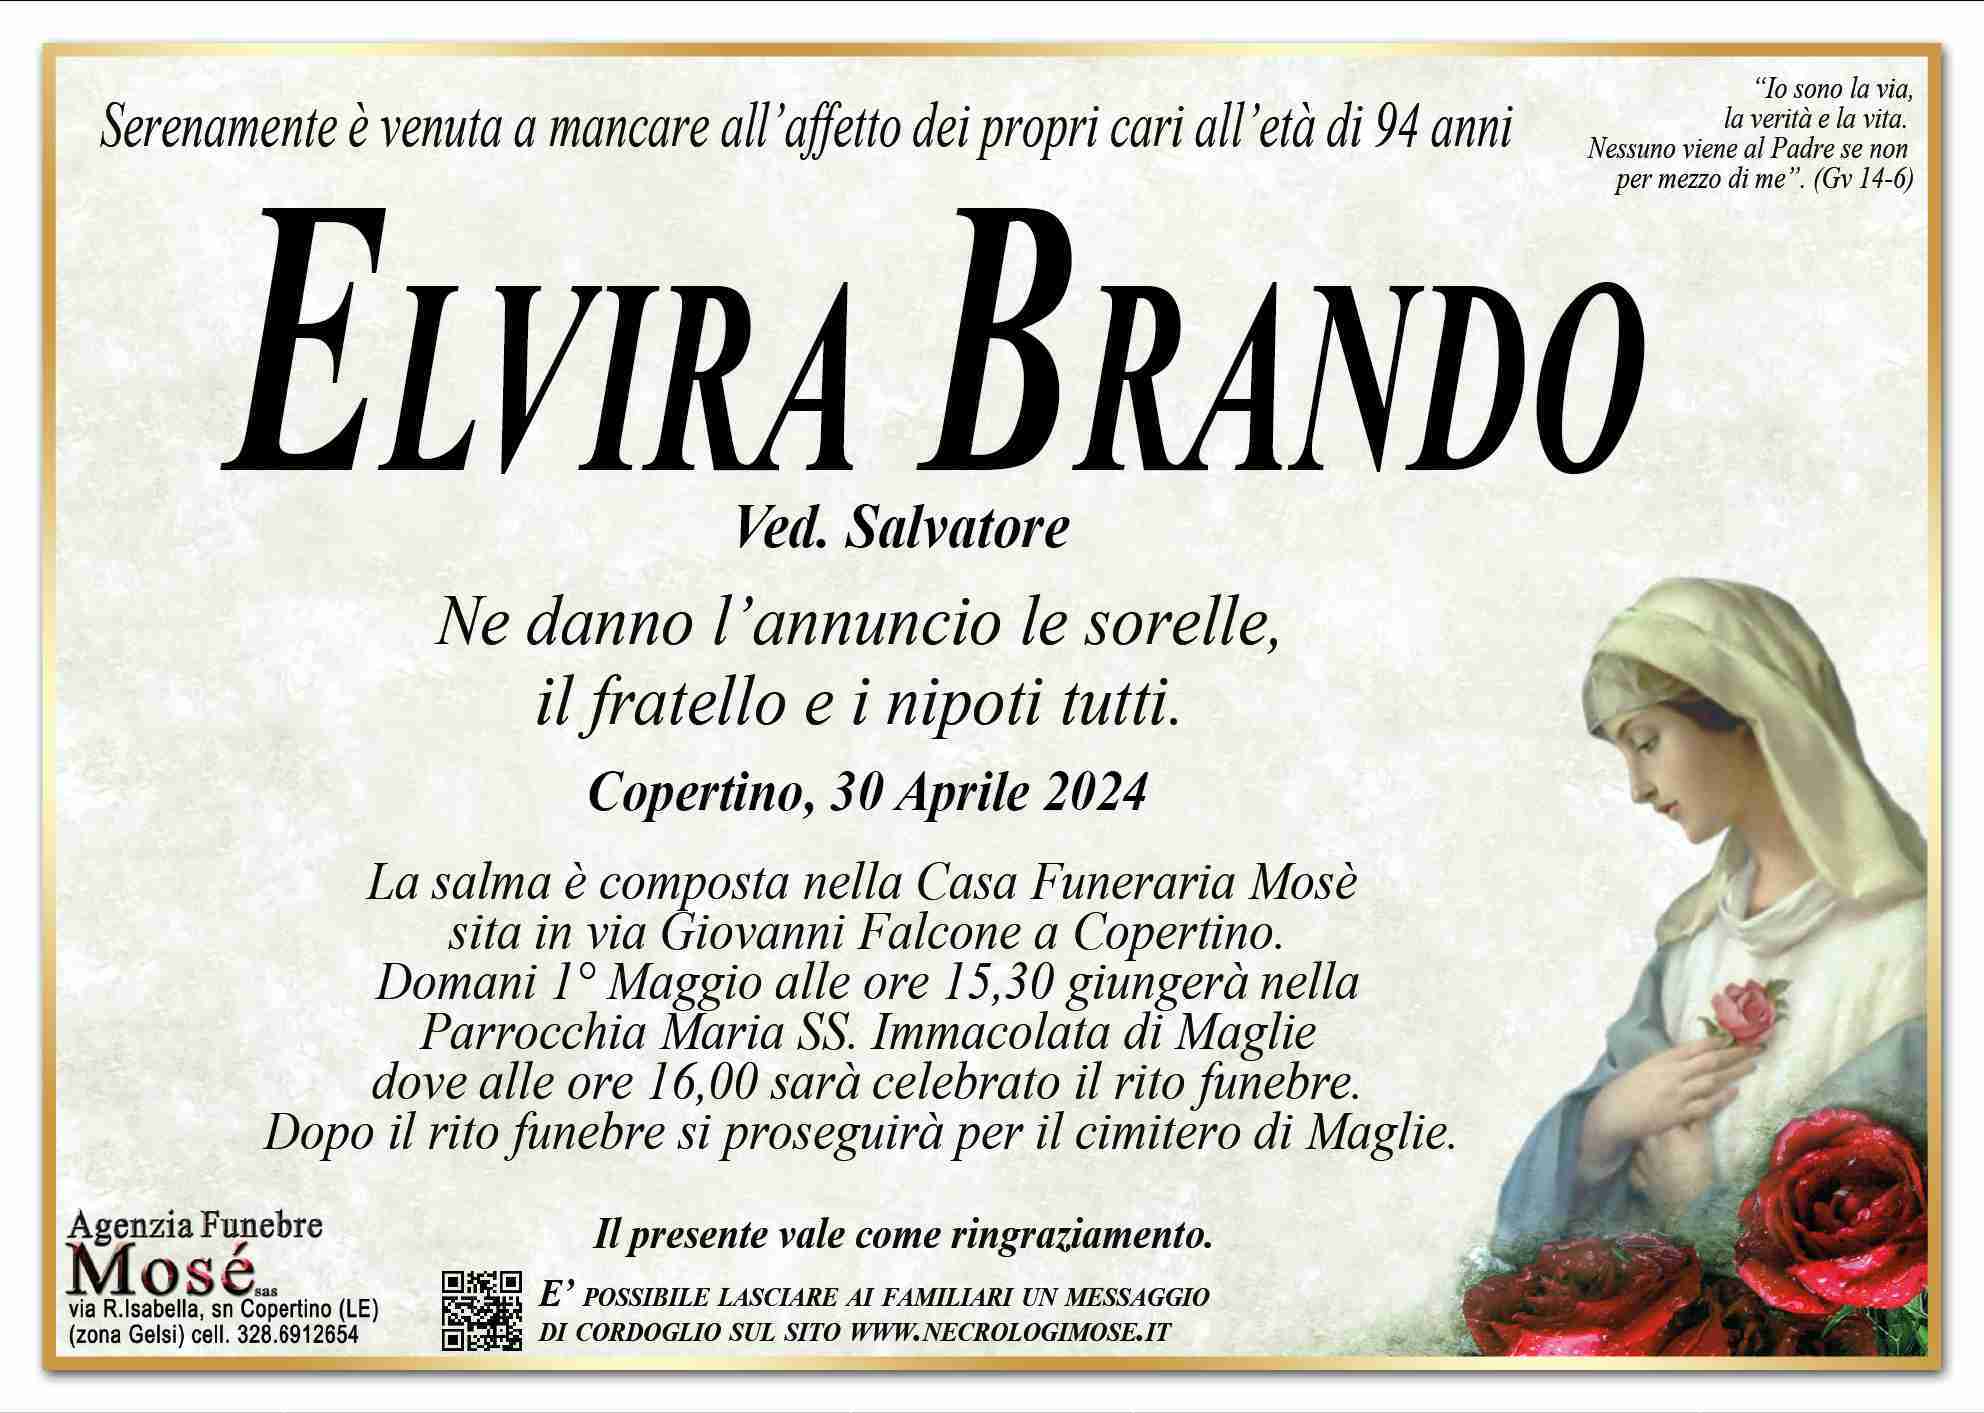 Elvira Brando